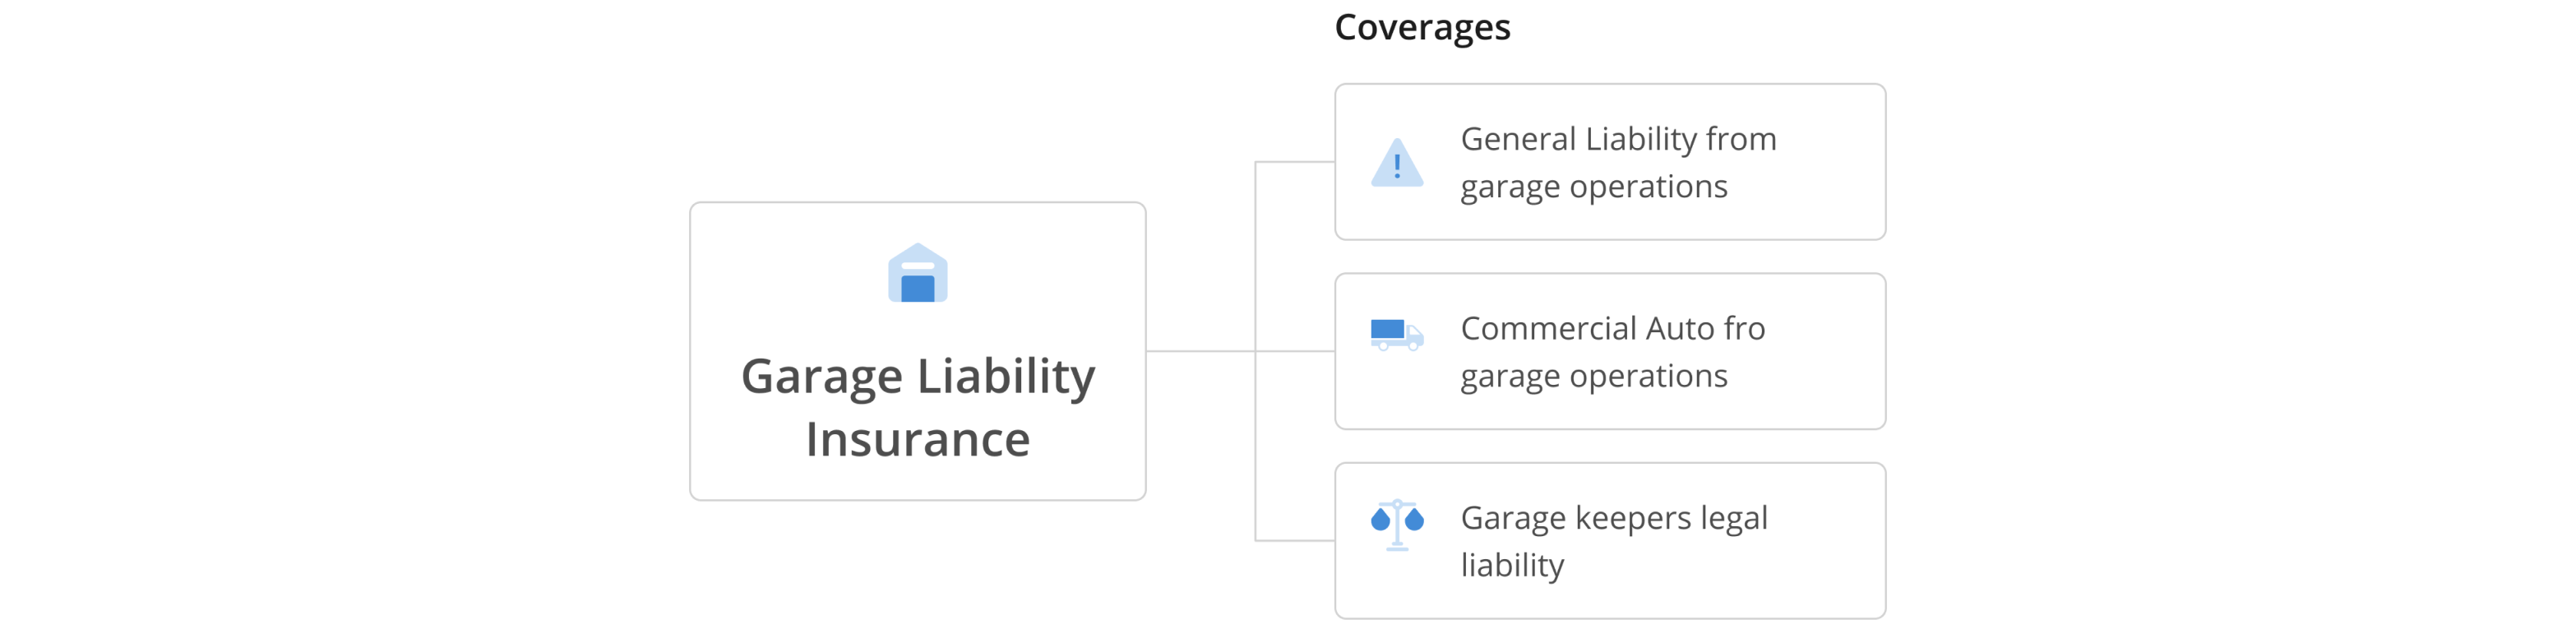 NEW - DESKTOP - Garage liability insurance infographic